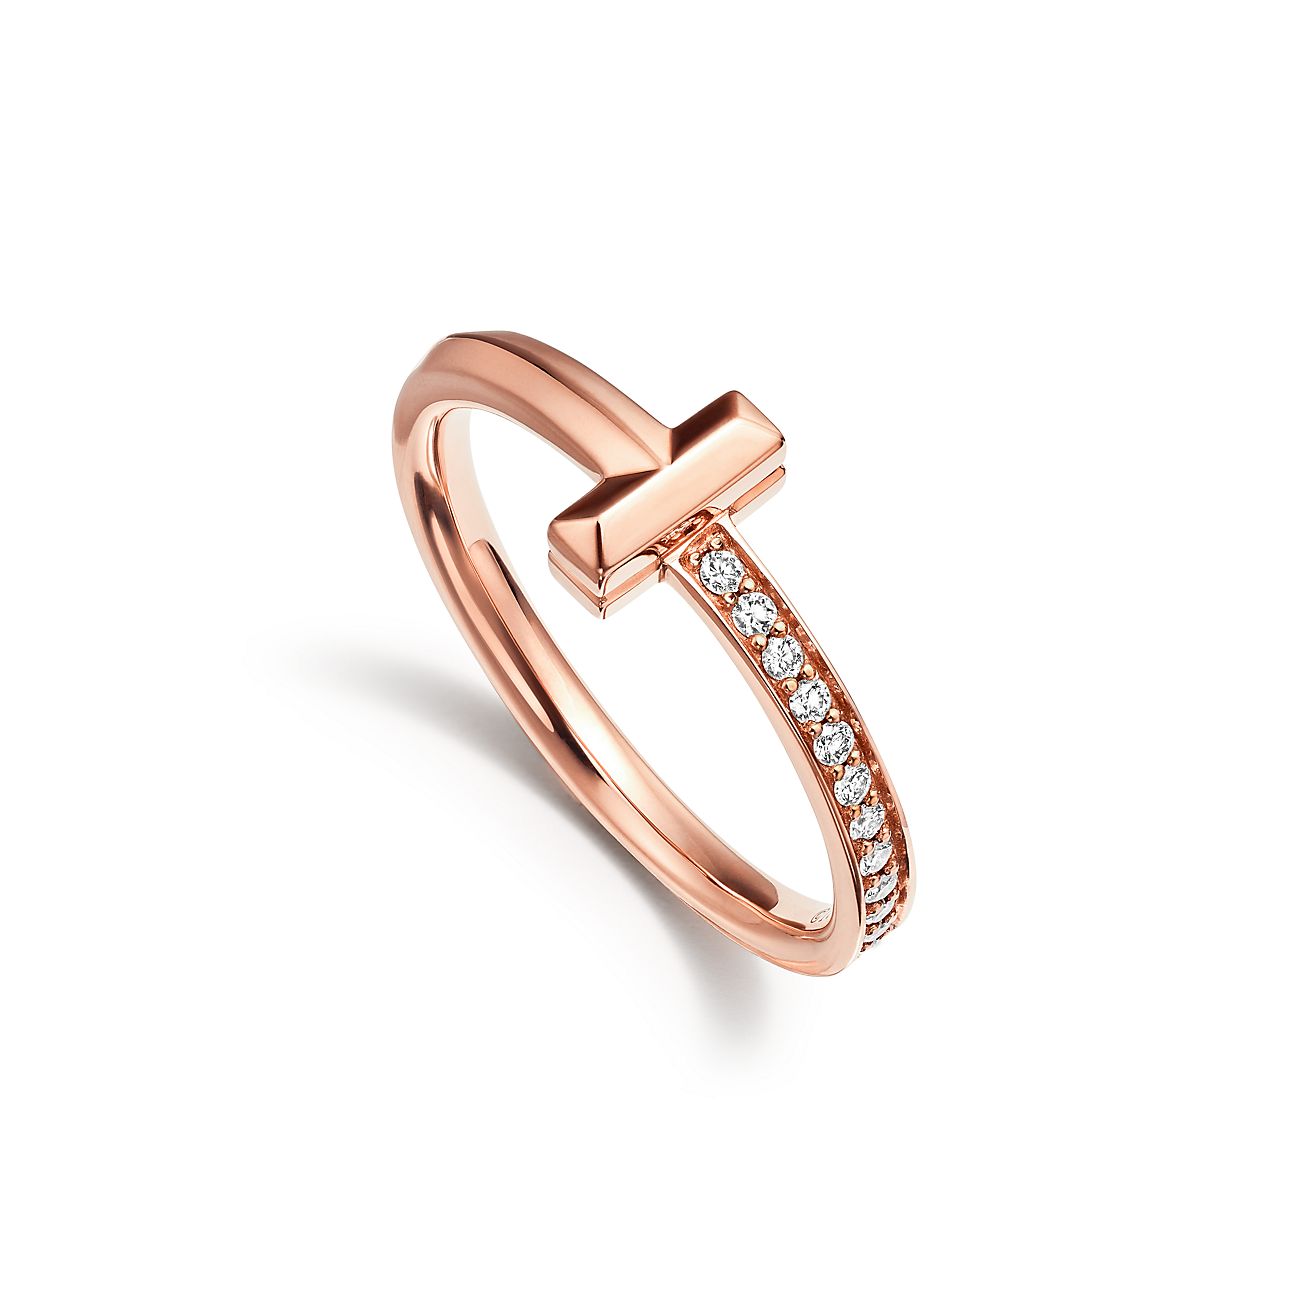 Tiffany T black onyx wire ring in 18k rose gold. | Tiffany & Co.